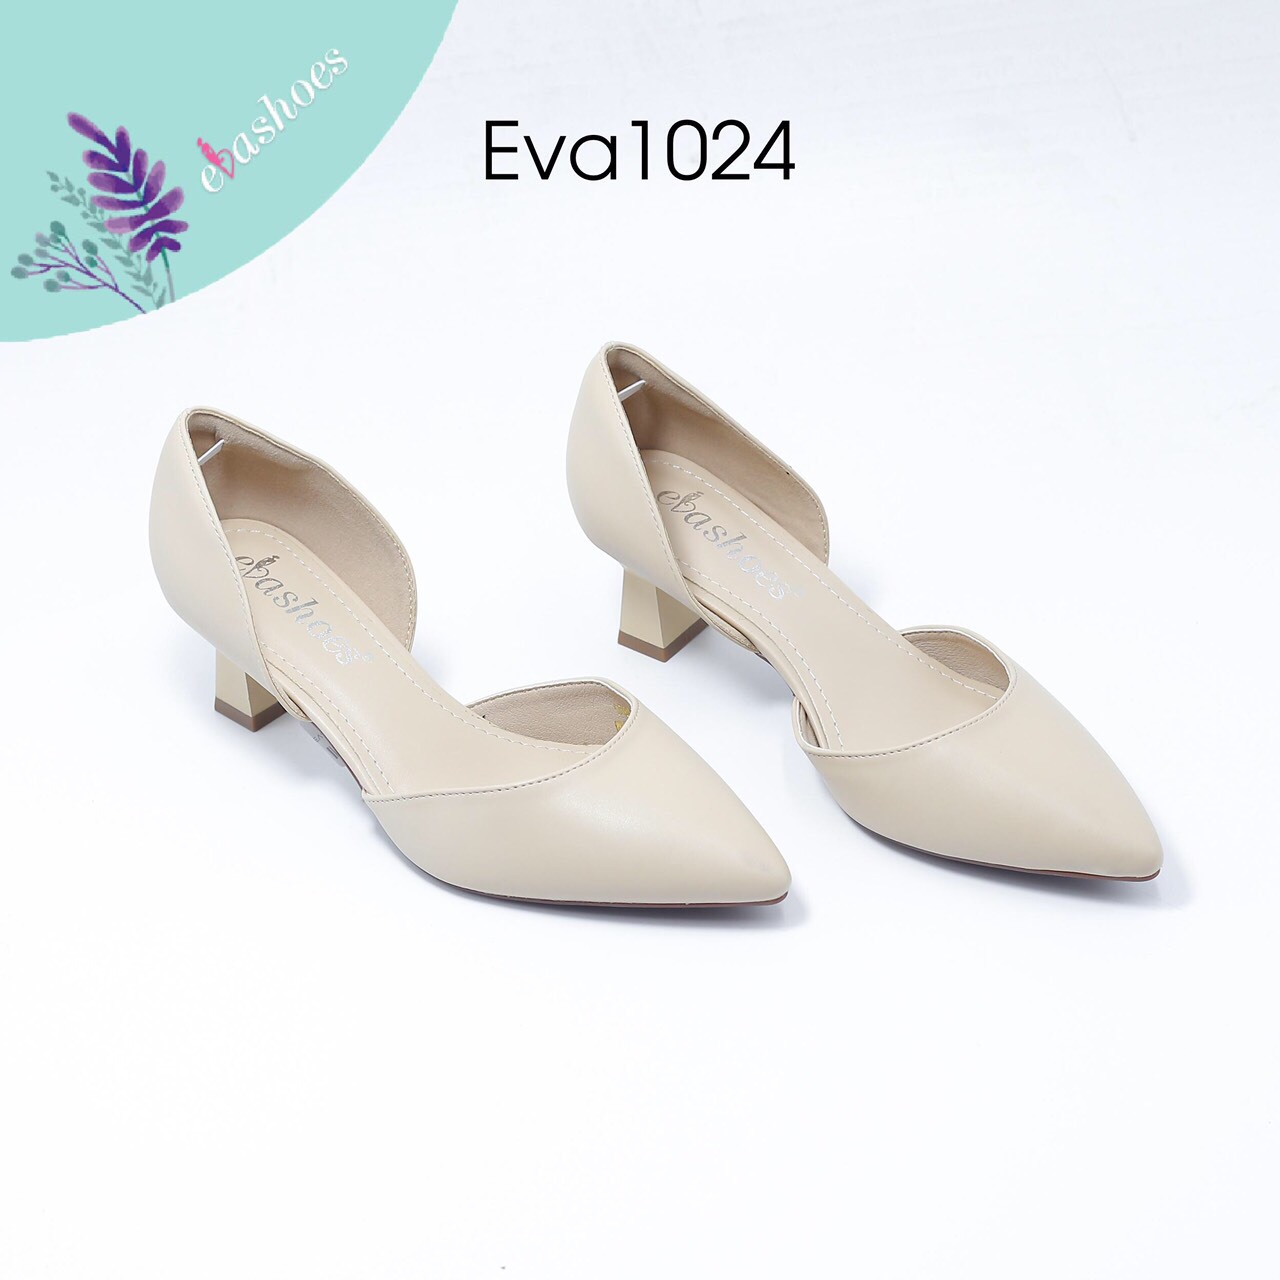 Giày nữ êm chân EVA1024